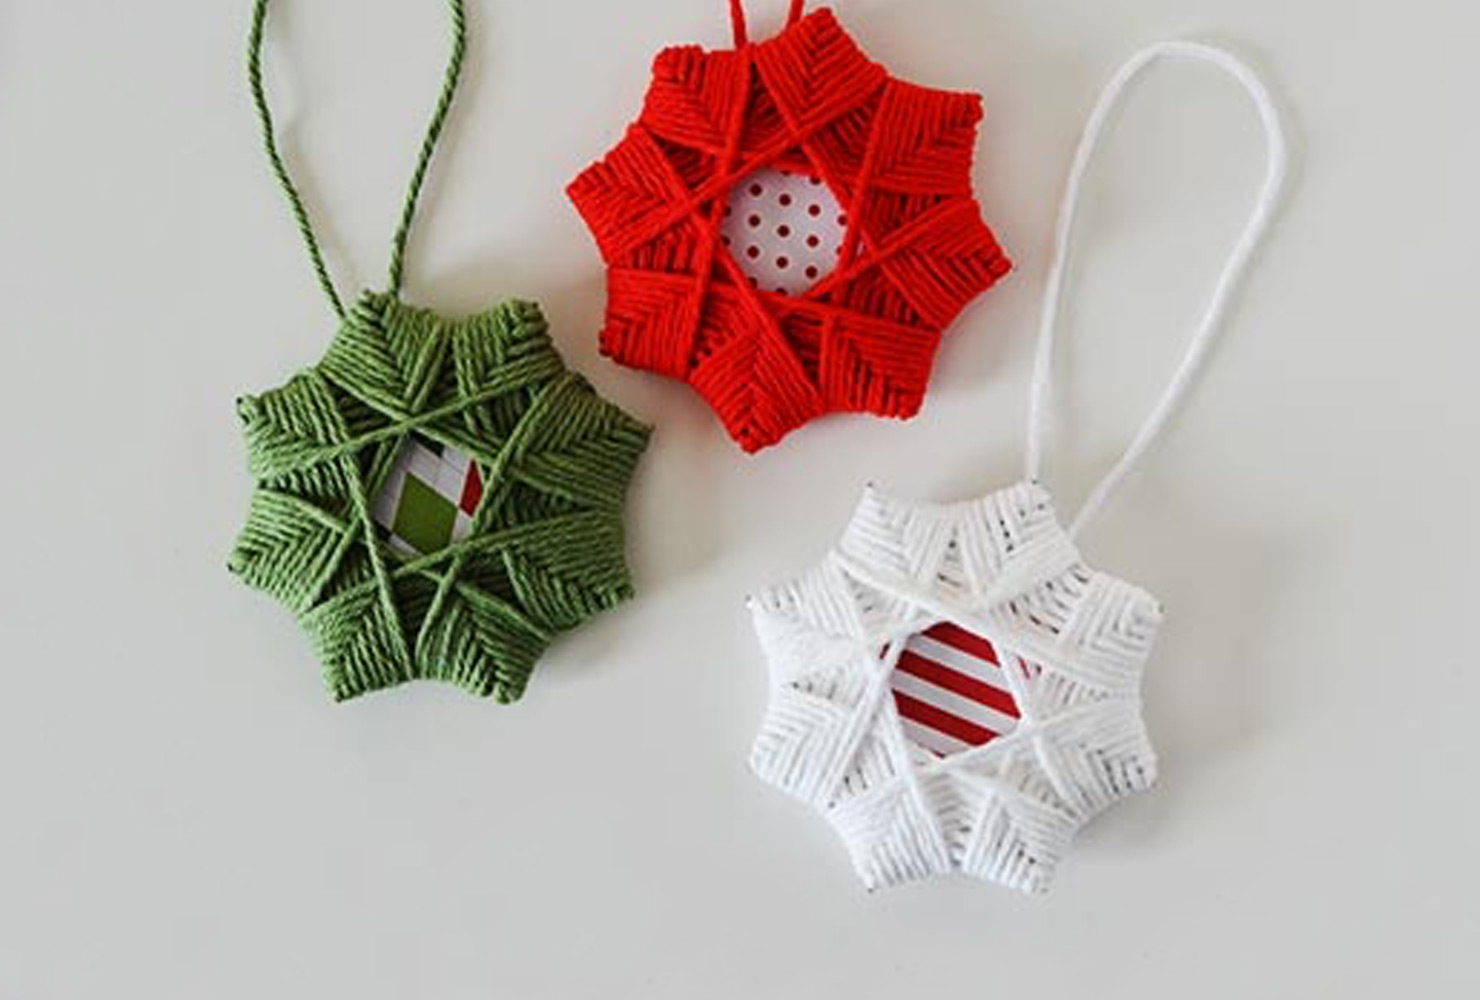  Christmas star ornaments made of yarn